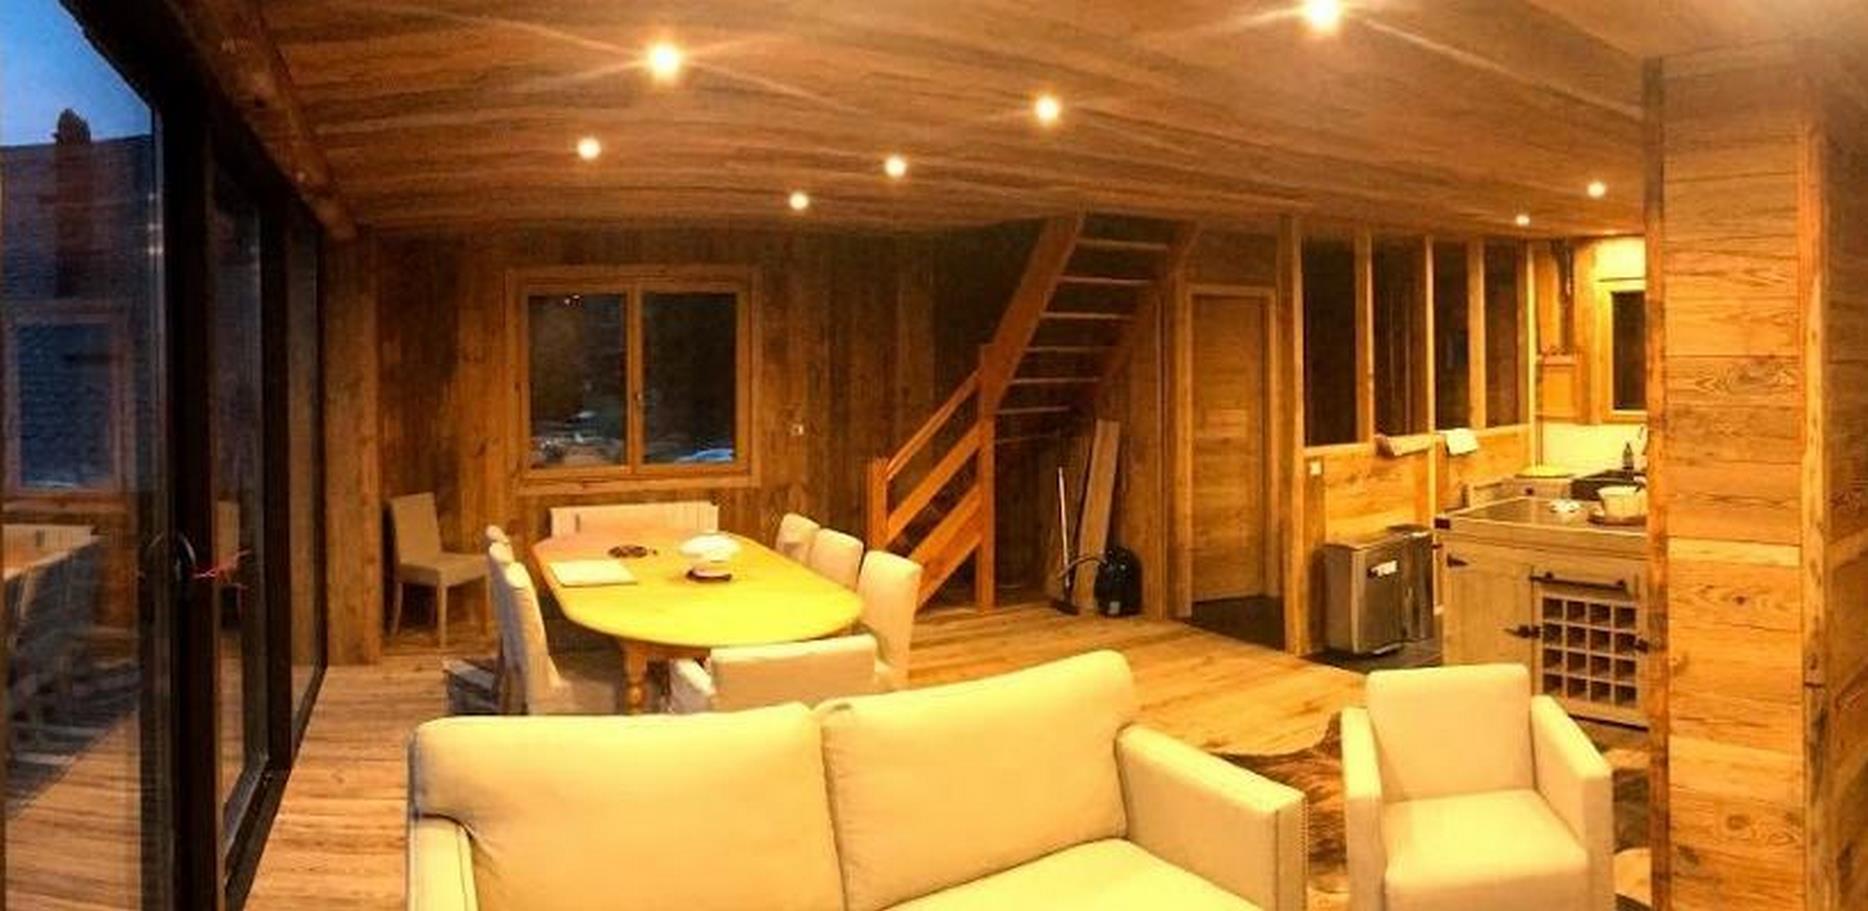 Super Besse Gite - living room of the chalet with beautiful view of the slopes of the Super Besse ski resort